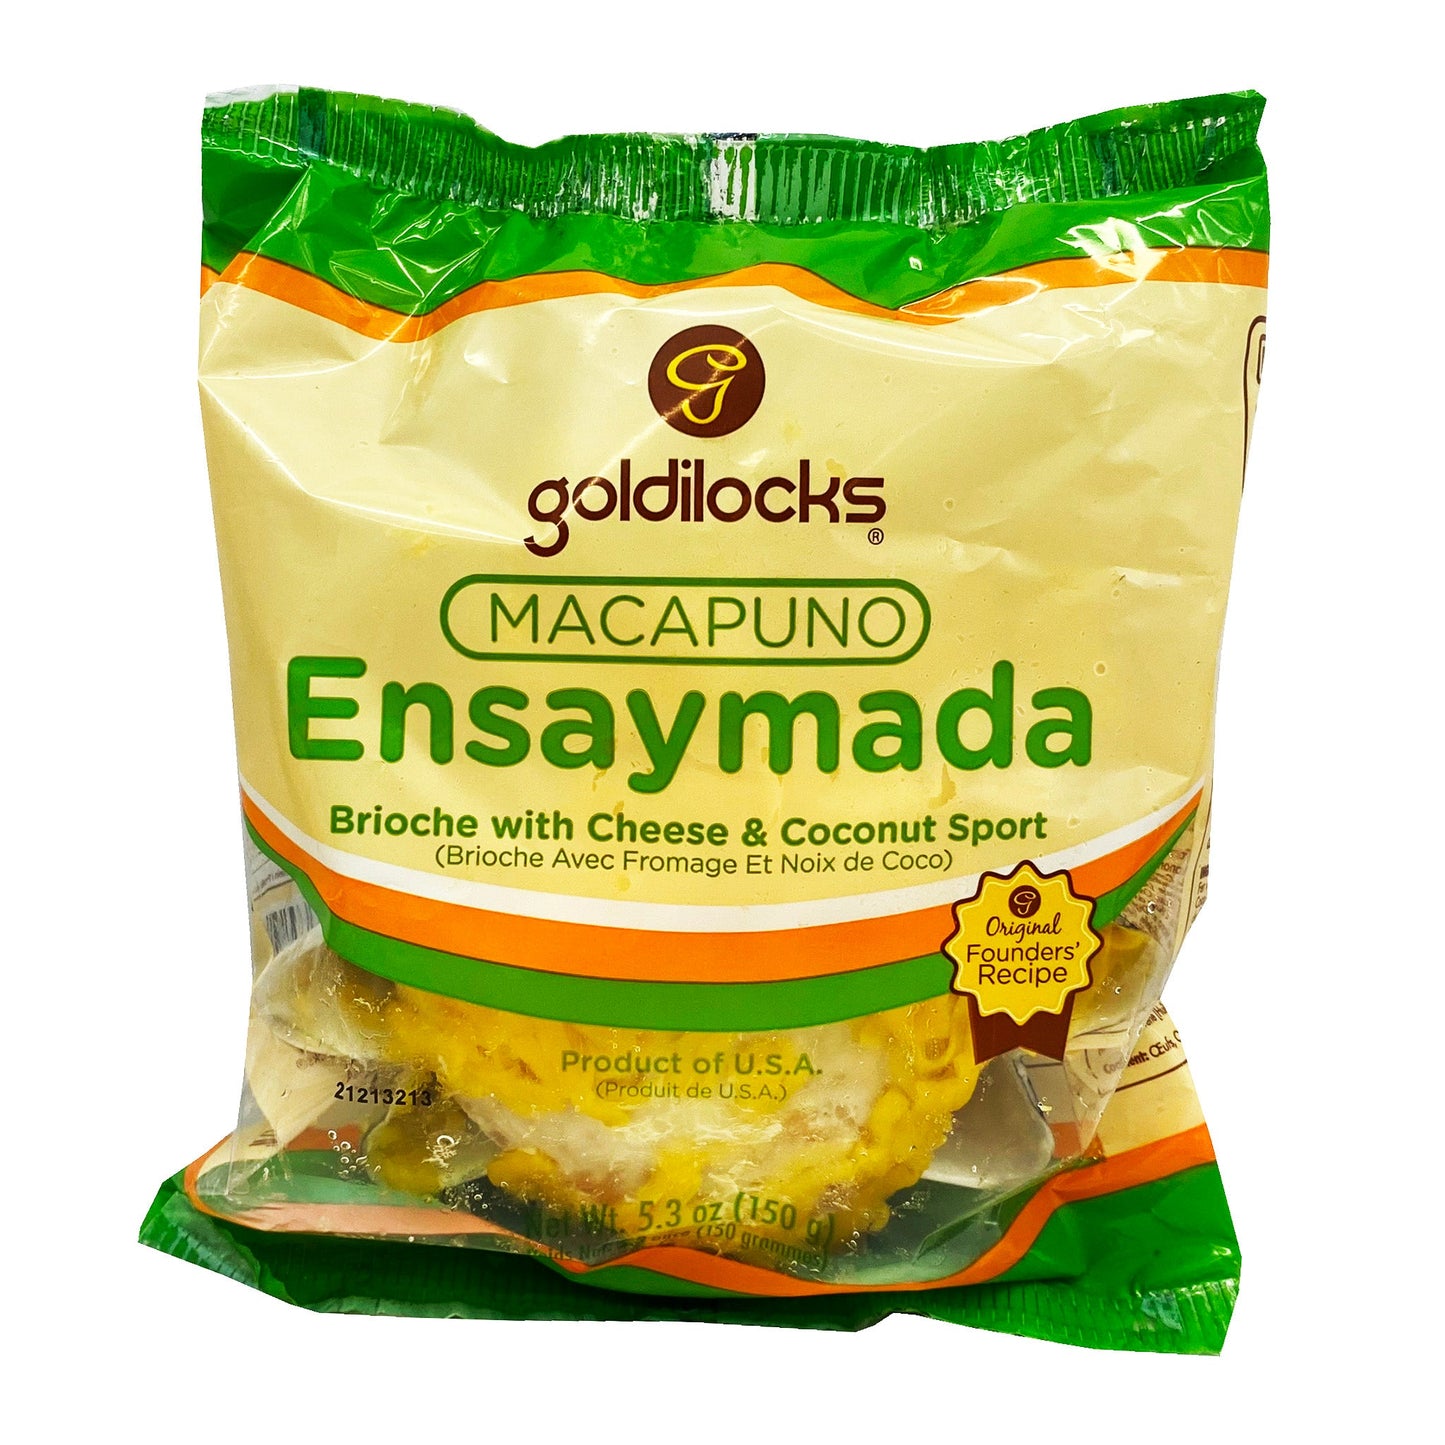 GOLDILOCKS ENSAYMADA WITH CHEESE MACAPUNO